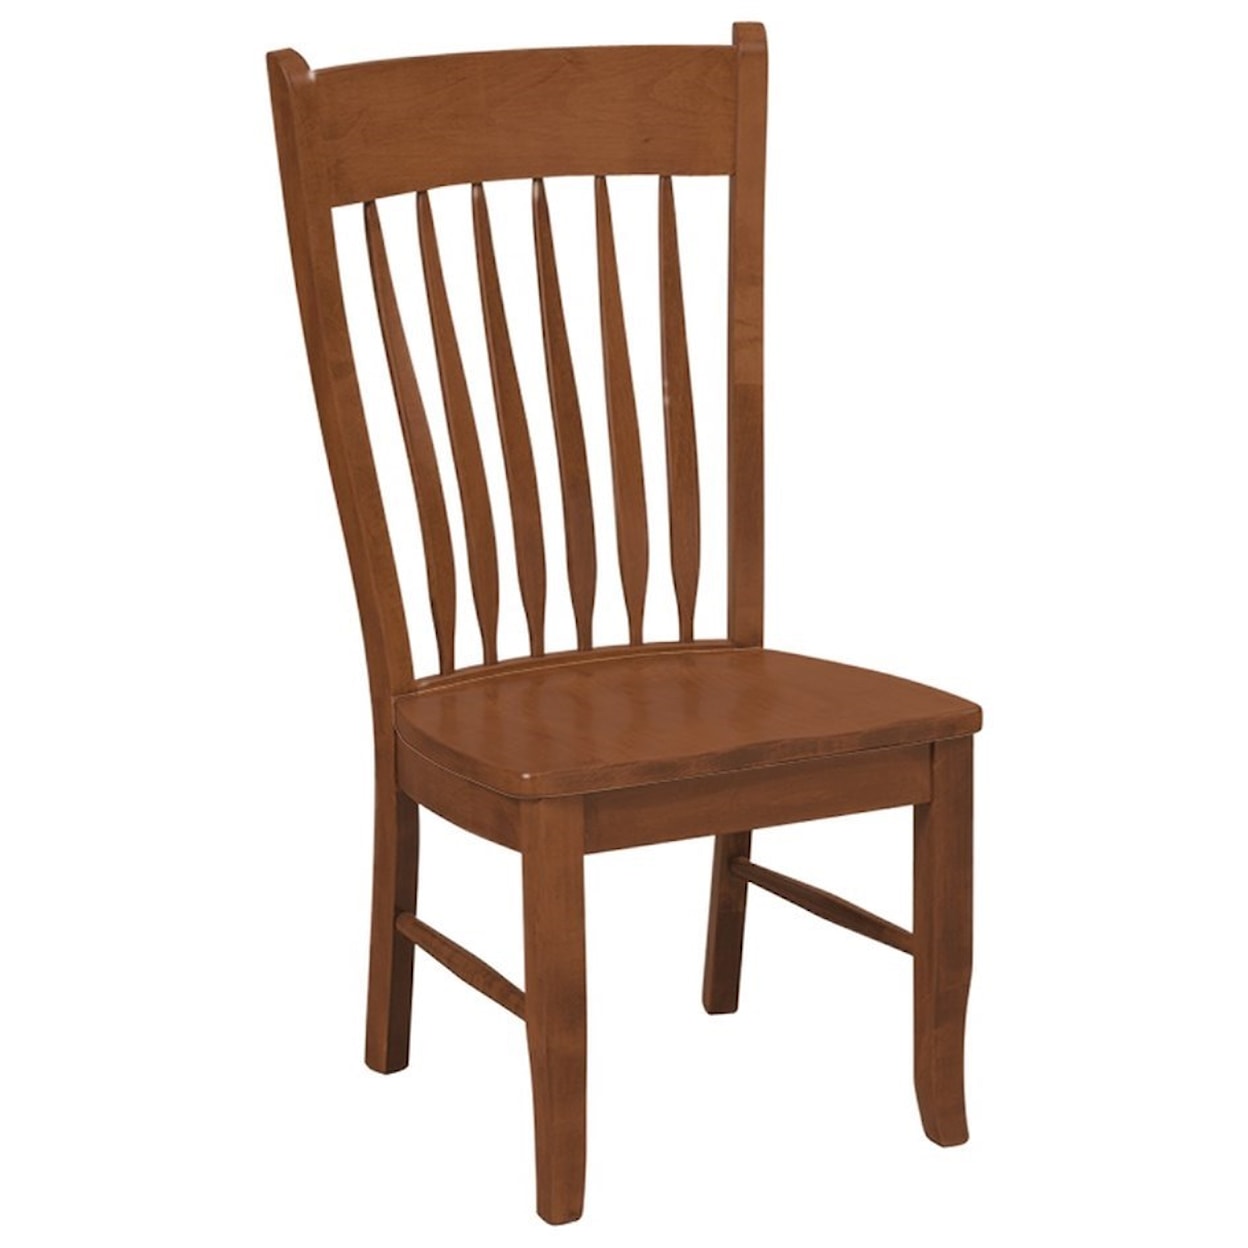 Daniels Amish Chairs and Barstools Buckeye Side Chair